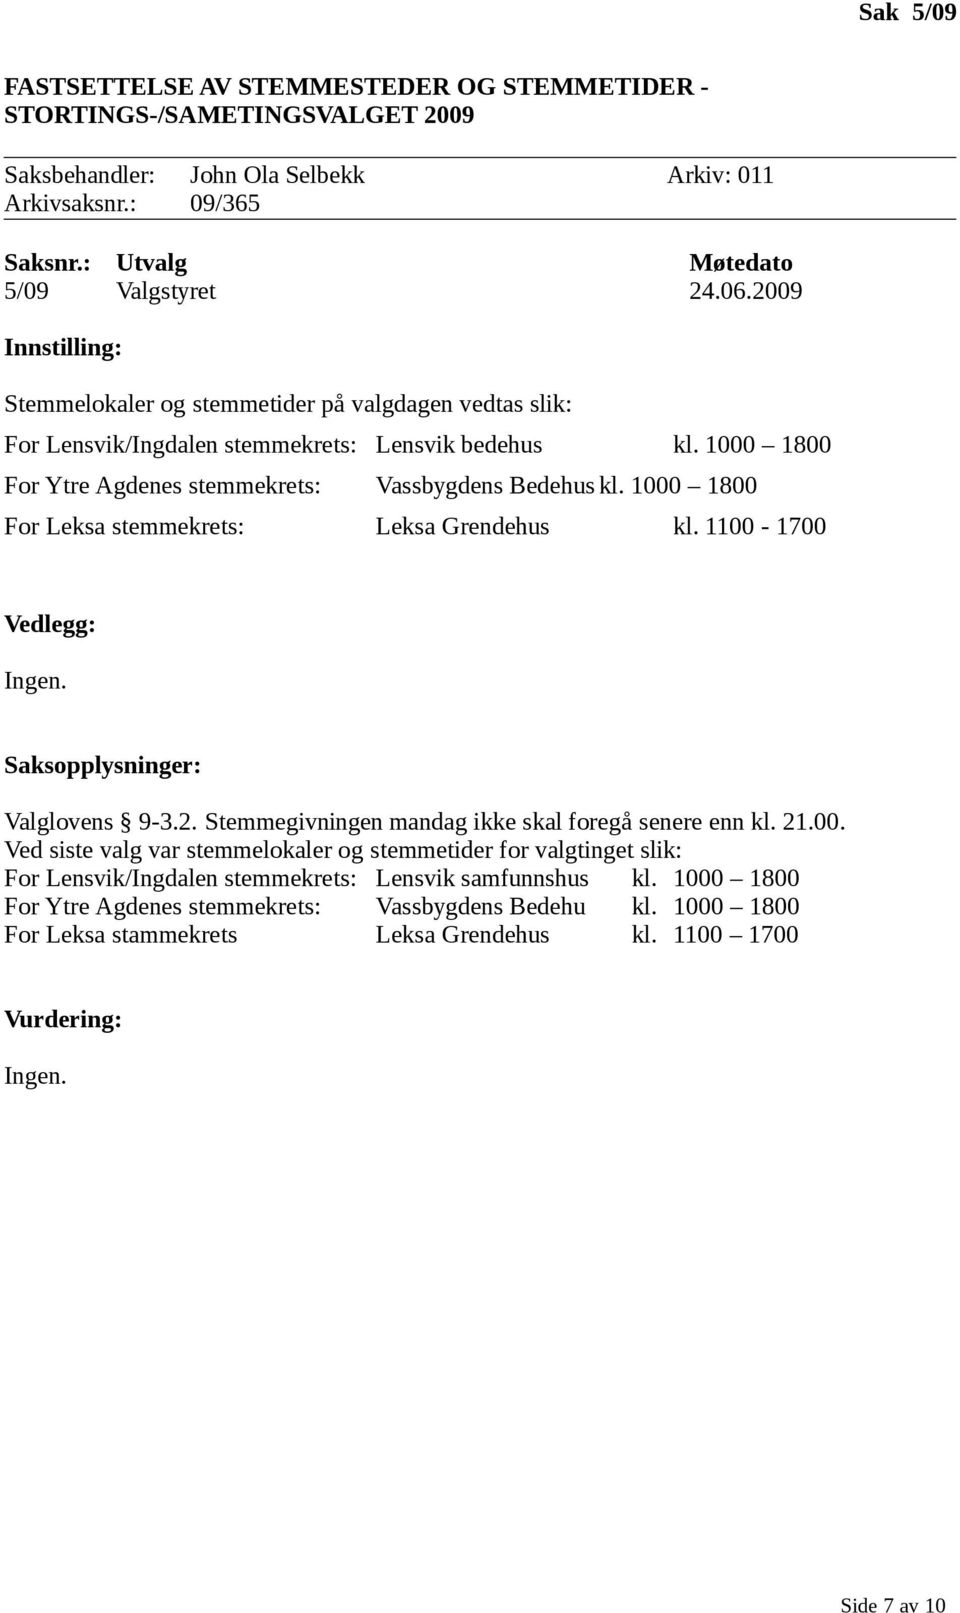 1000 1800 For Ytre Agdenes stemmekrets: Vassbygdens Bedehus kl. 1000 1800 For Leksa stemmekrets: Leksa Grendehus kl. 1100-1700 Valglovens 9-3.2.